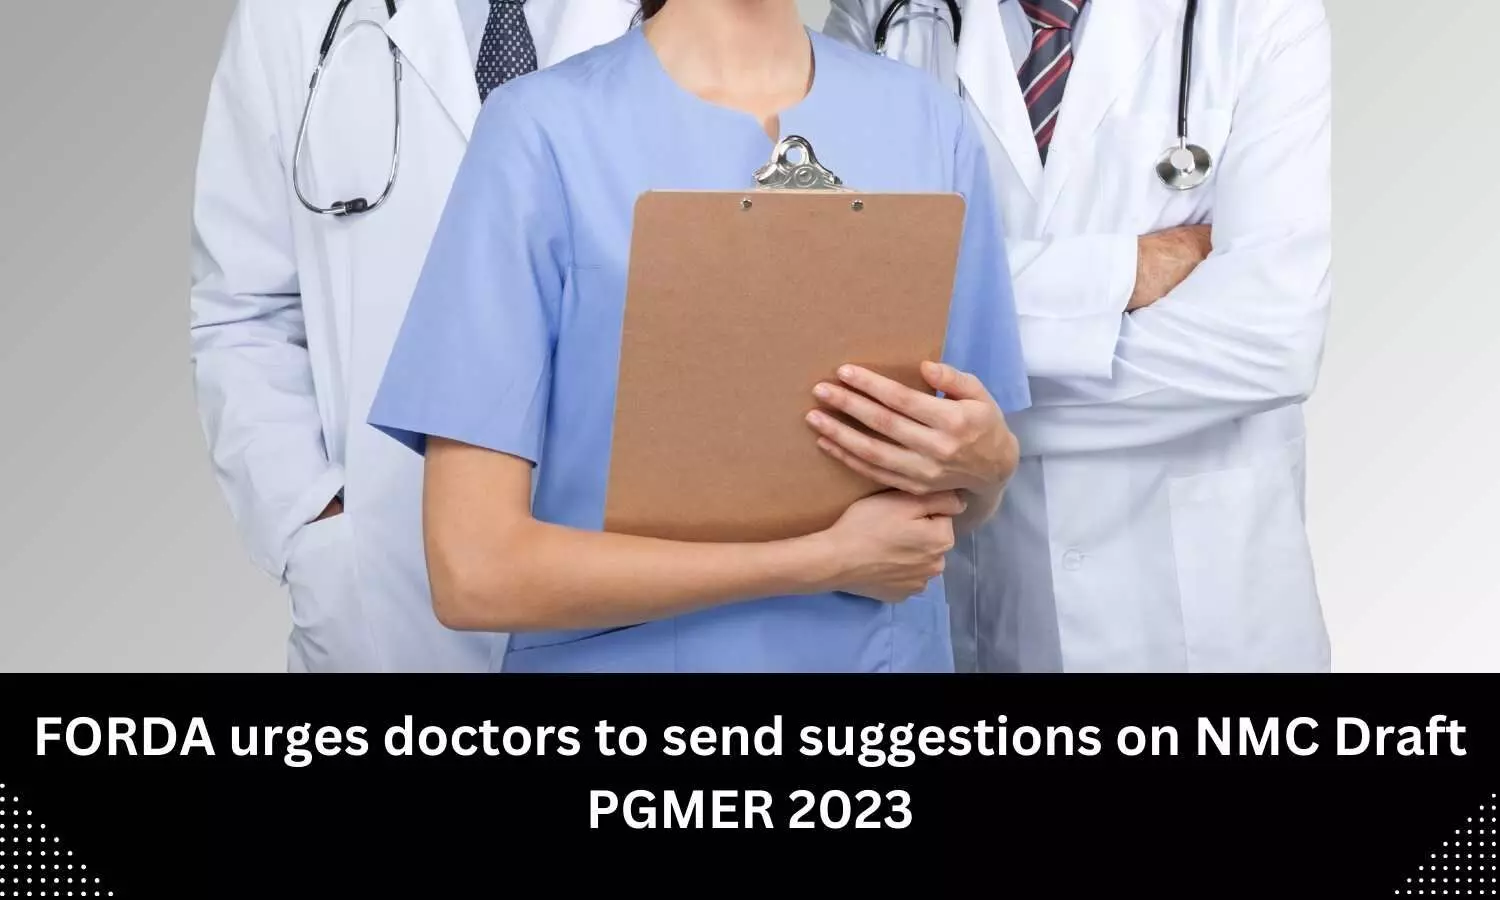 Send suggestions on NMC Draft PGMER 2023: FORDA urges doctors